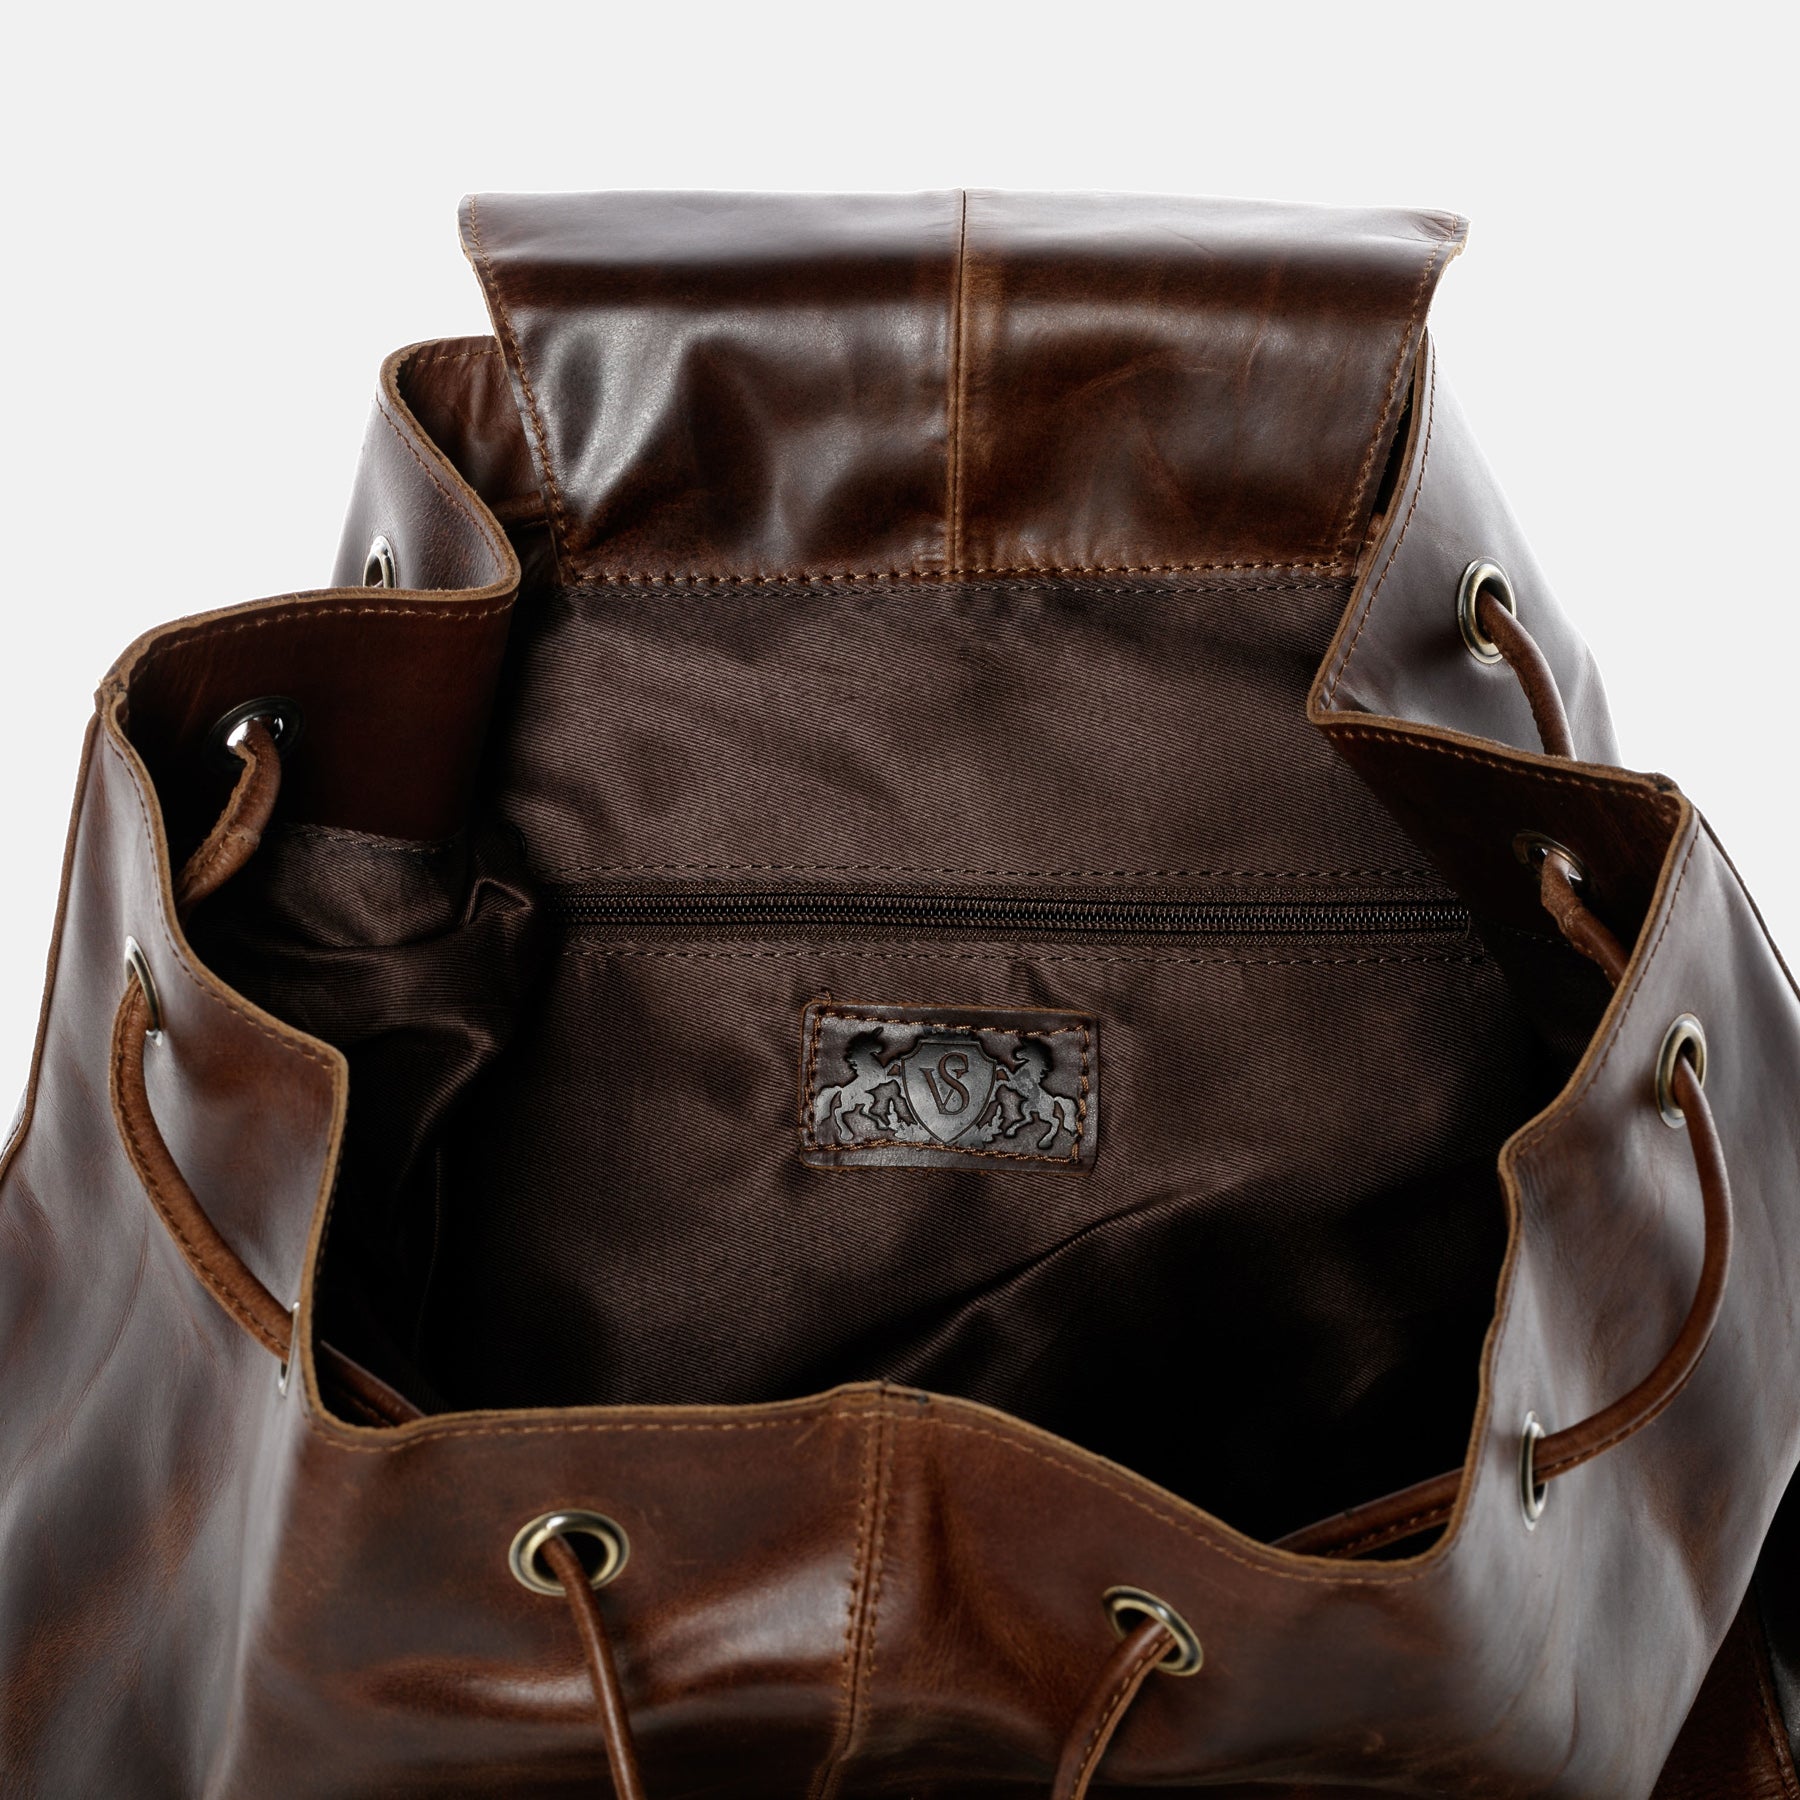 Duffel bag HEATHROW natural leather brown-cognac